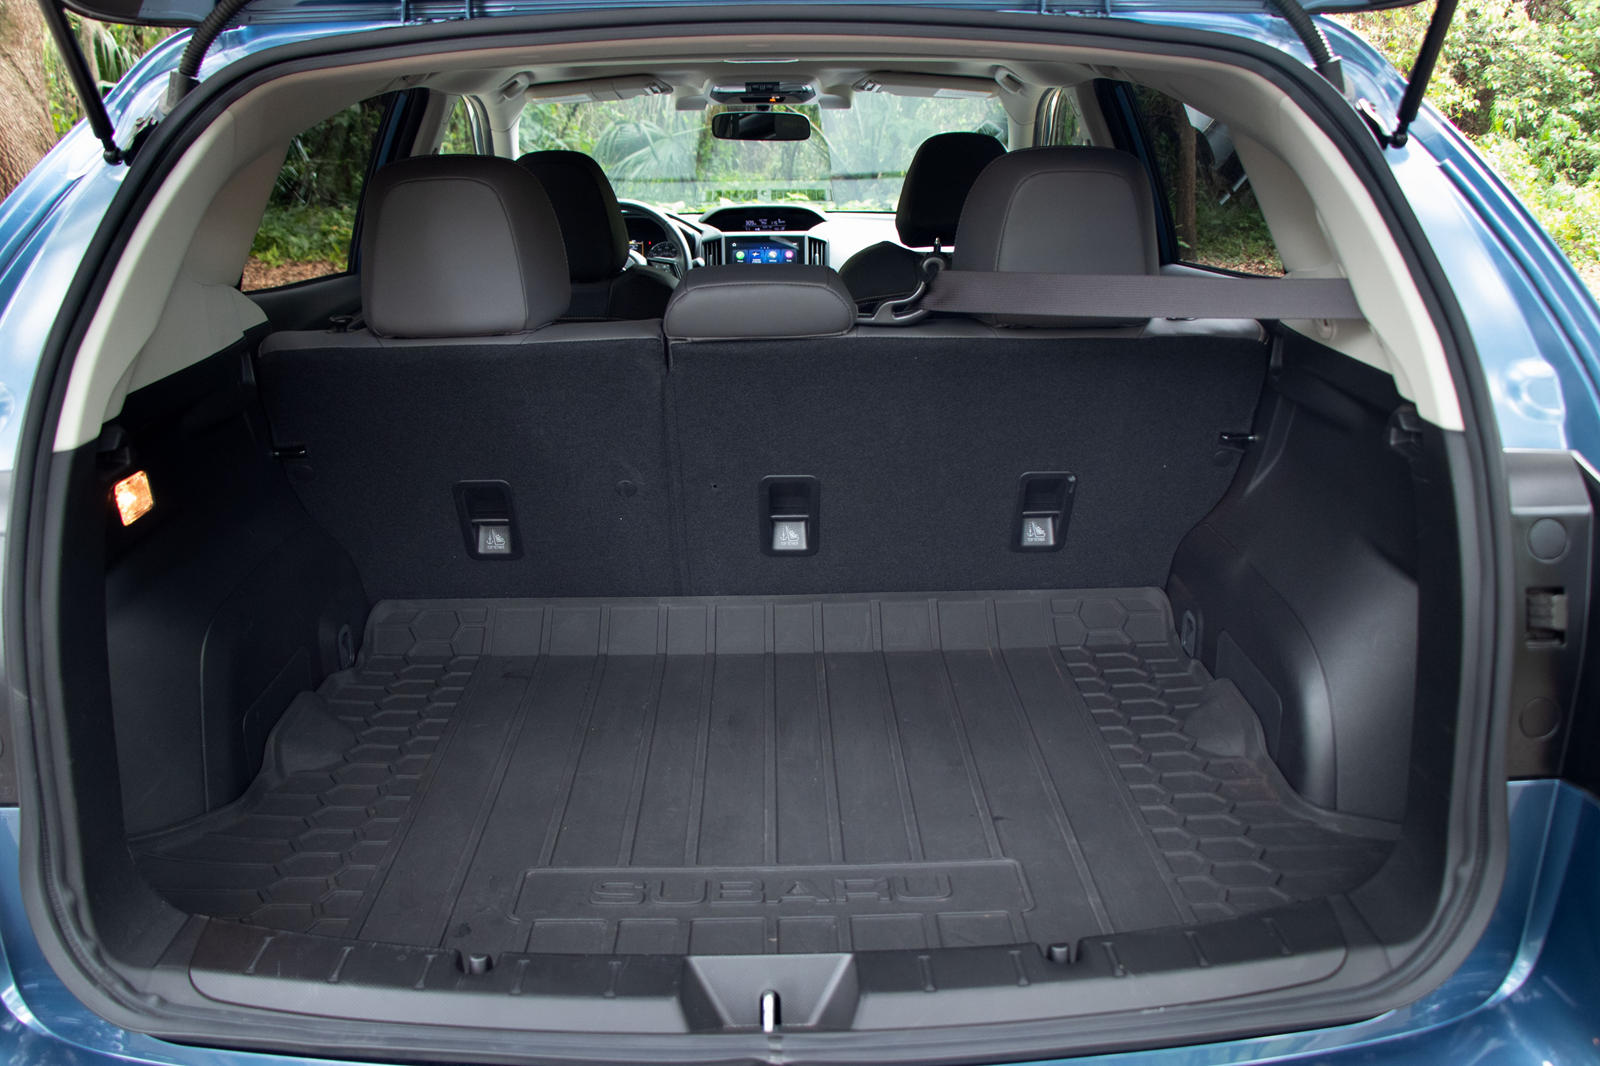 2023 Subaru Crosstrek Interior Dimensions: Seating, Cargo Space